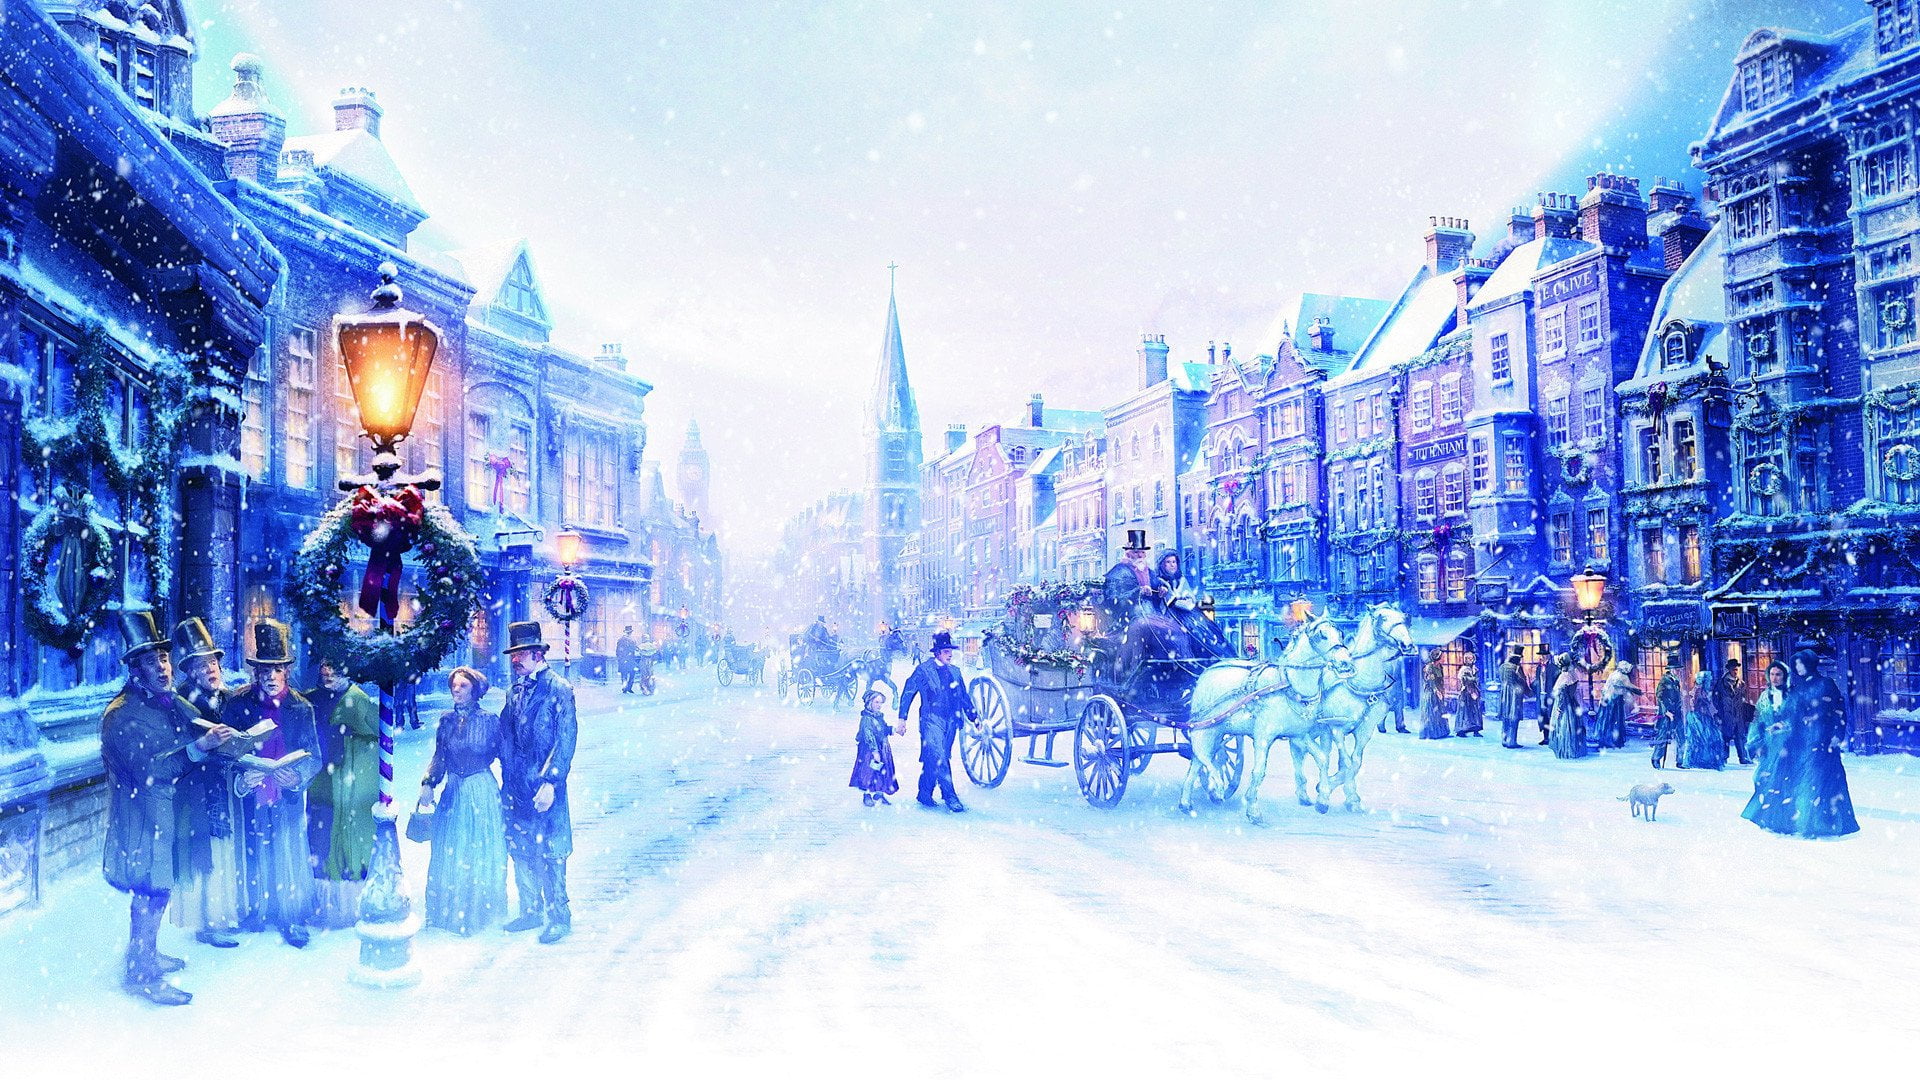 Disney, A Christmas Carol, winter, snow, cold temperature, architecture